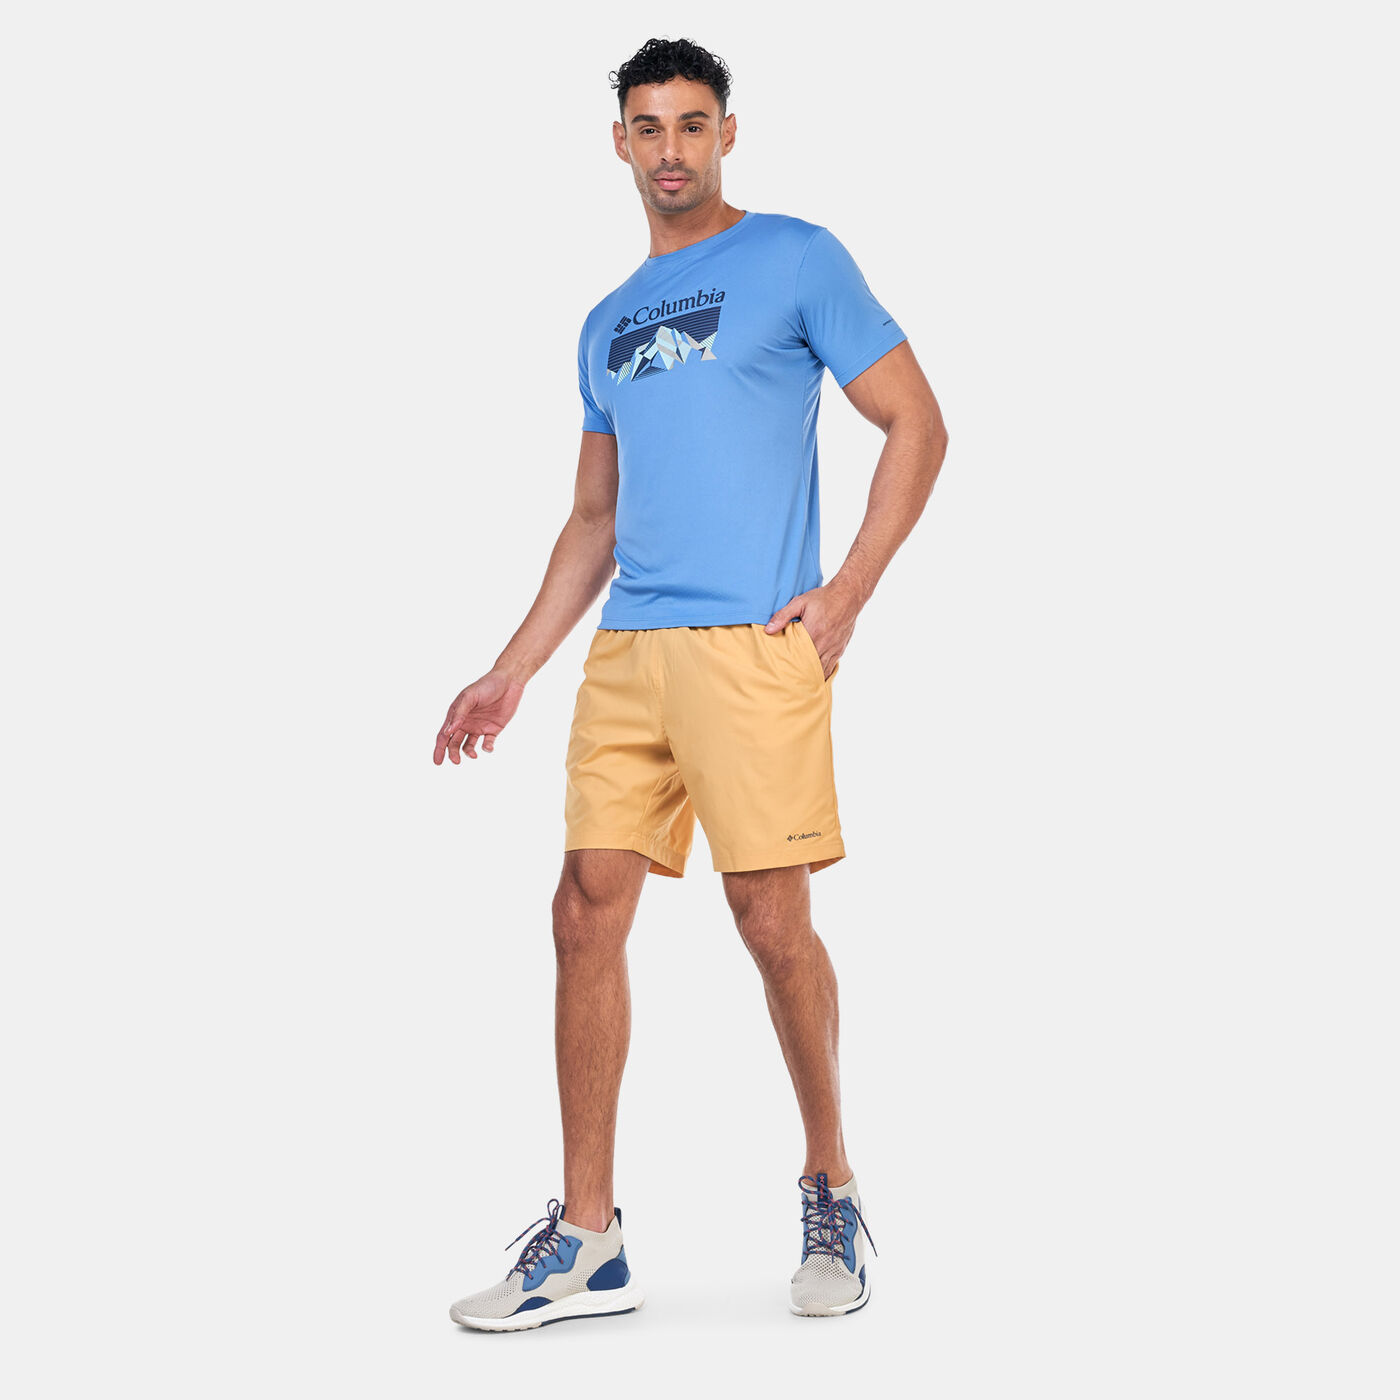 Men's Summertide Stretch Shorts